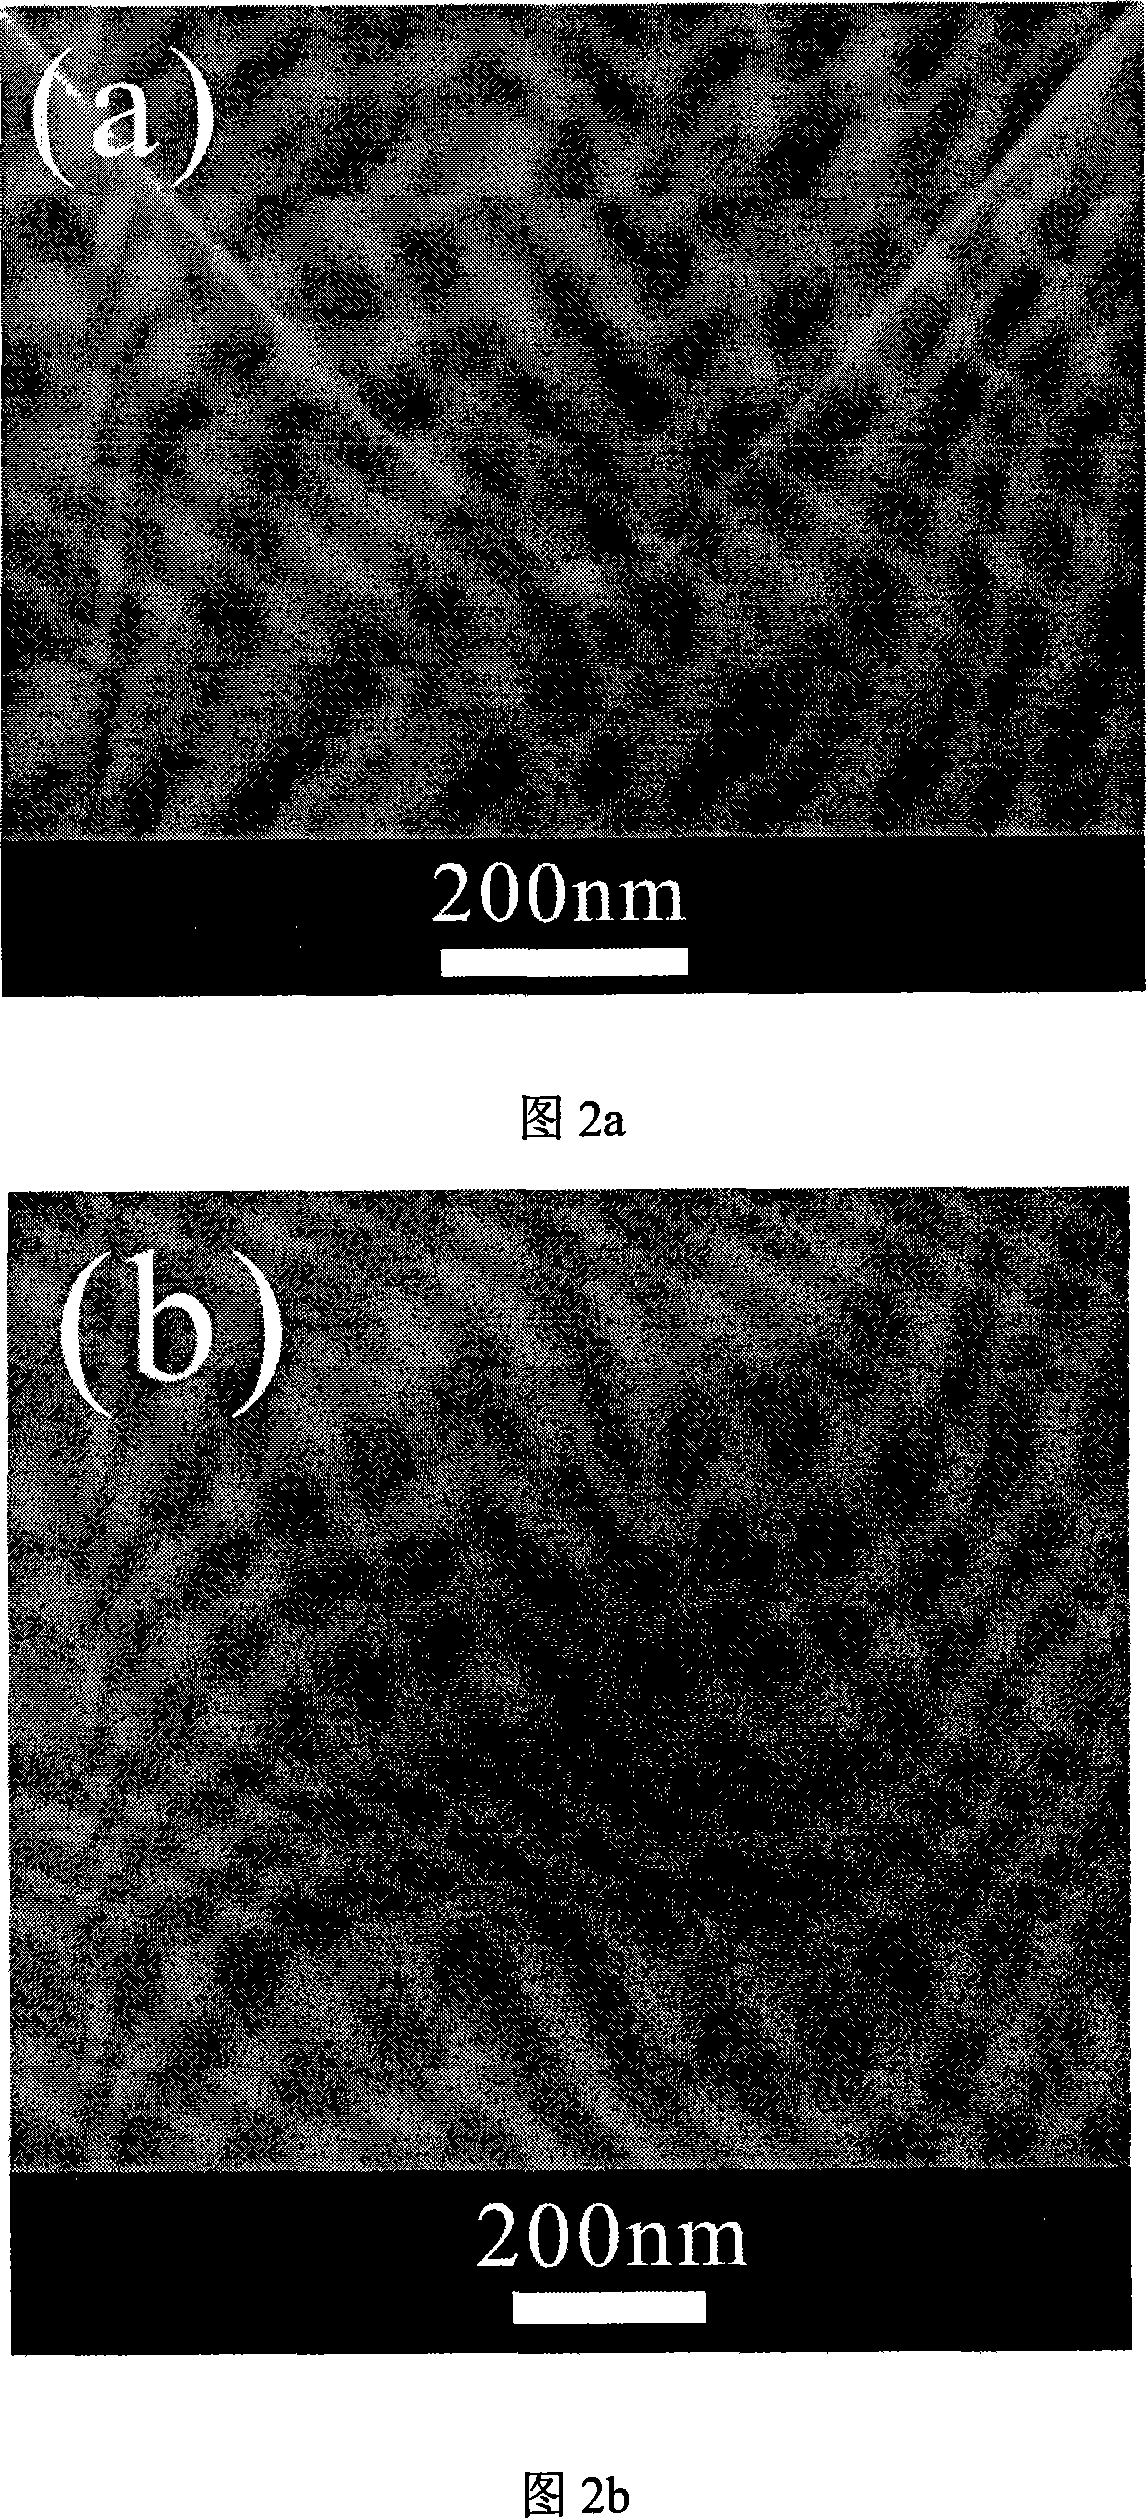 Method for preparing single nano material in pore space structure